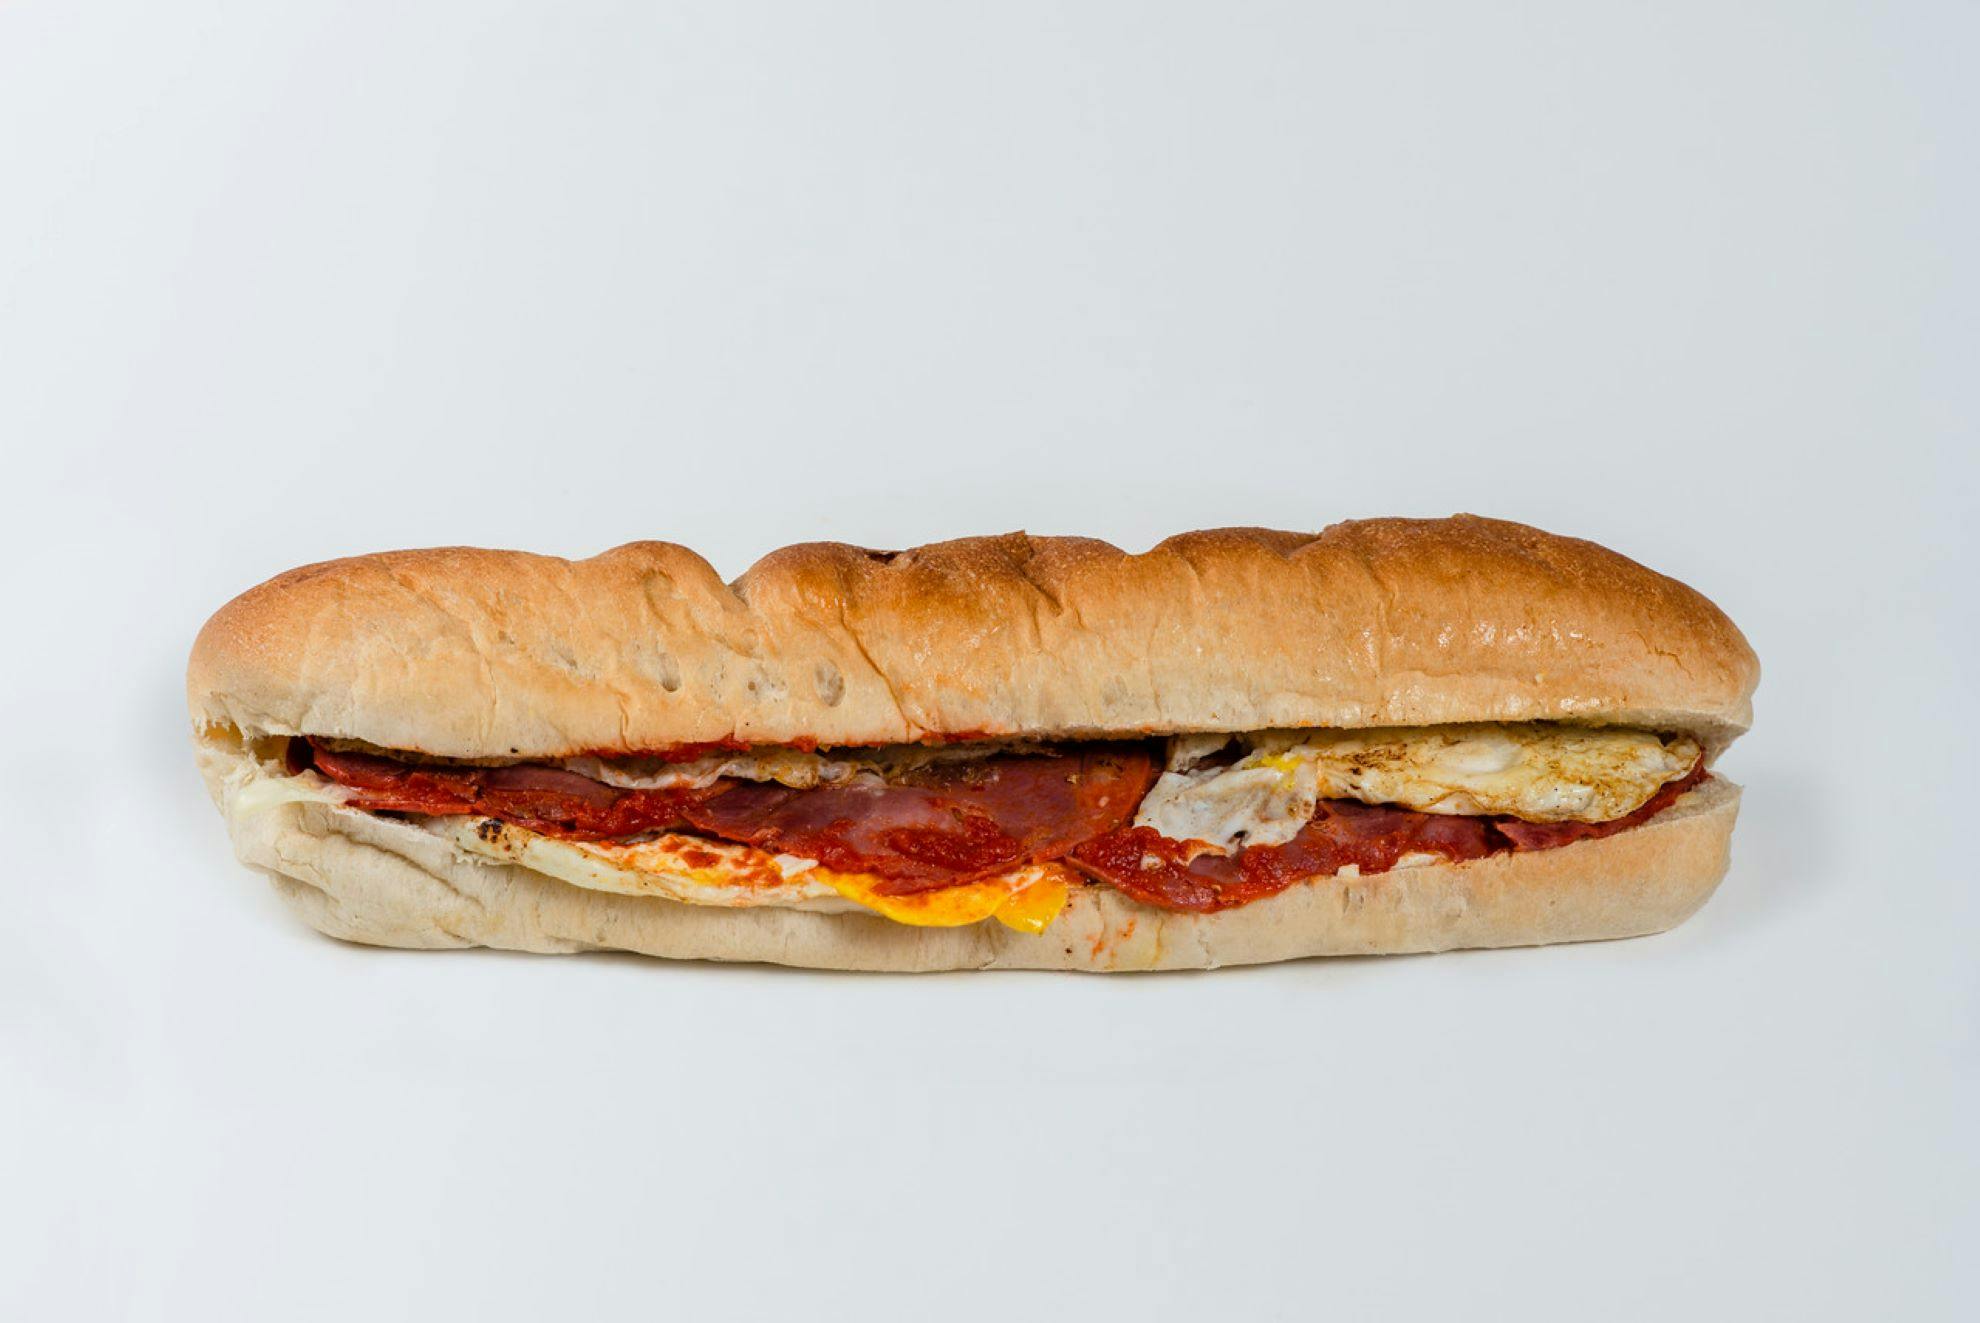 Italian Stallion Breakfast Sandwich from Gandolfo's New York Deli - Pleasant Grove in Pleasant Grove, UT